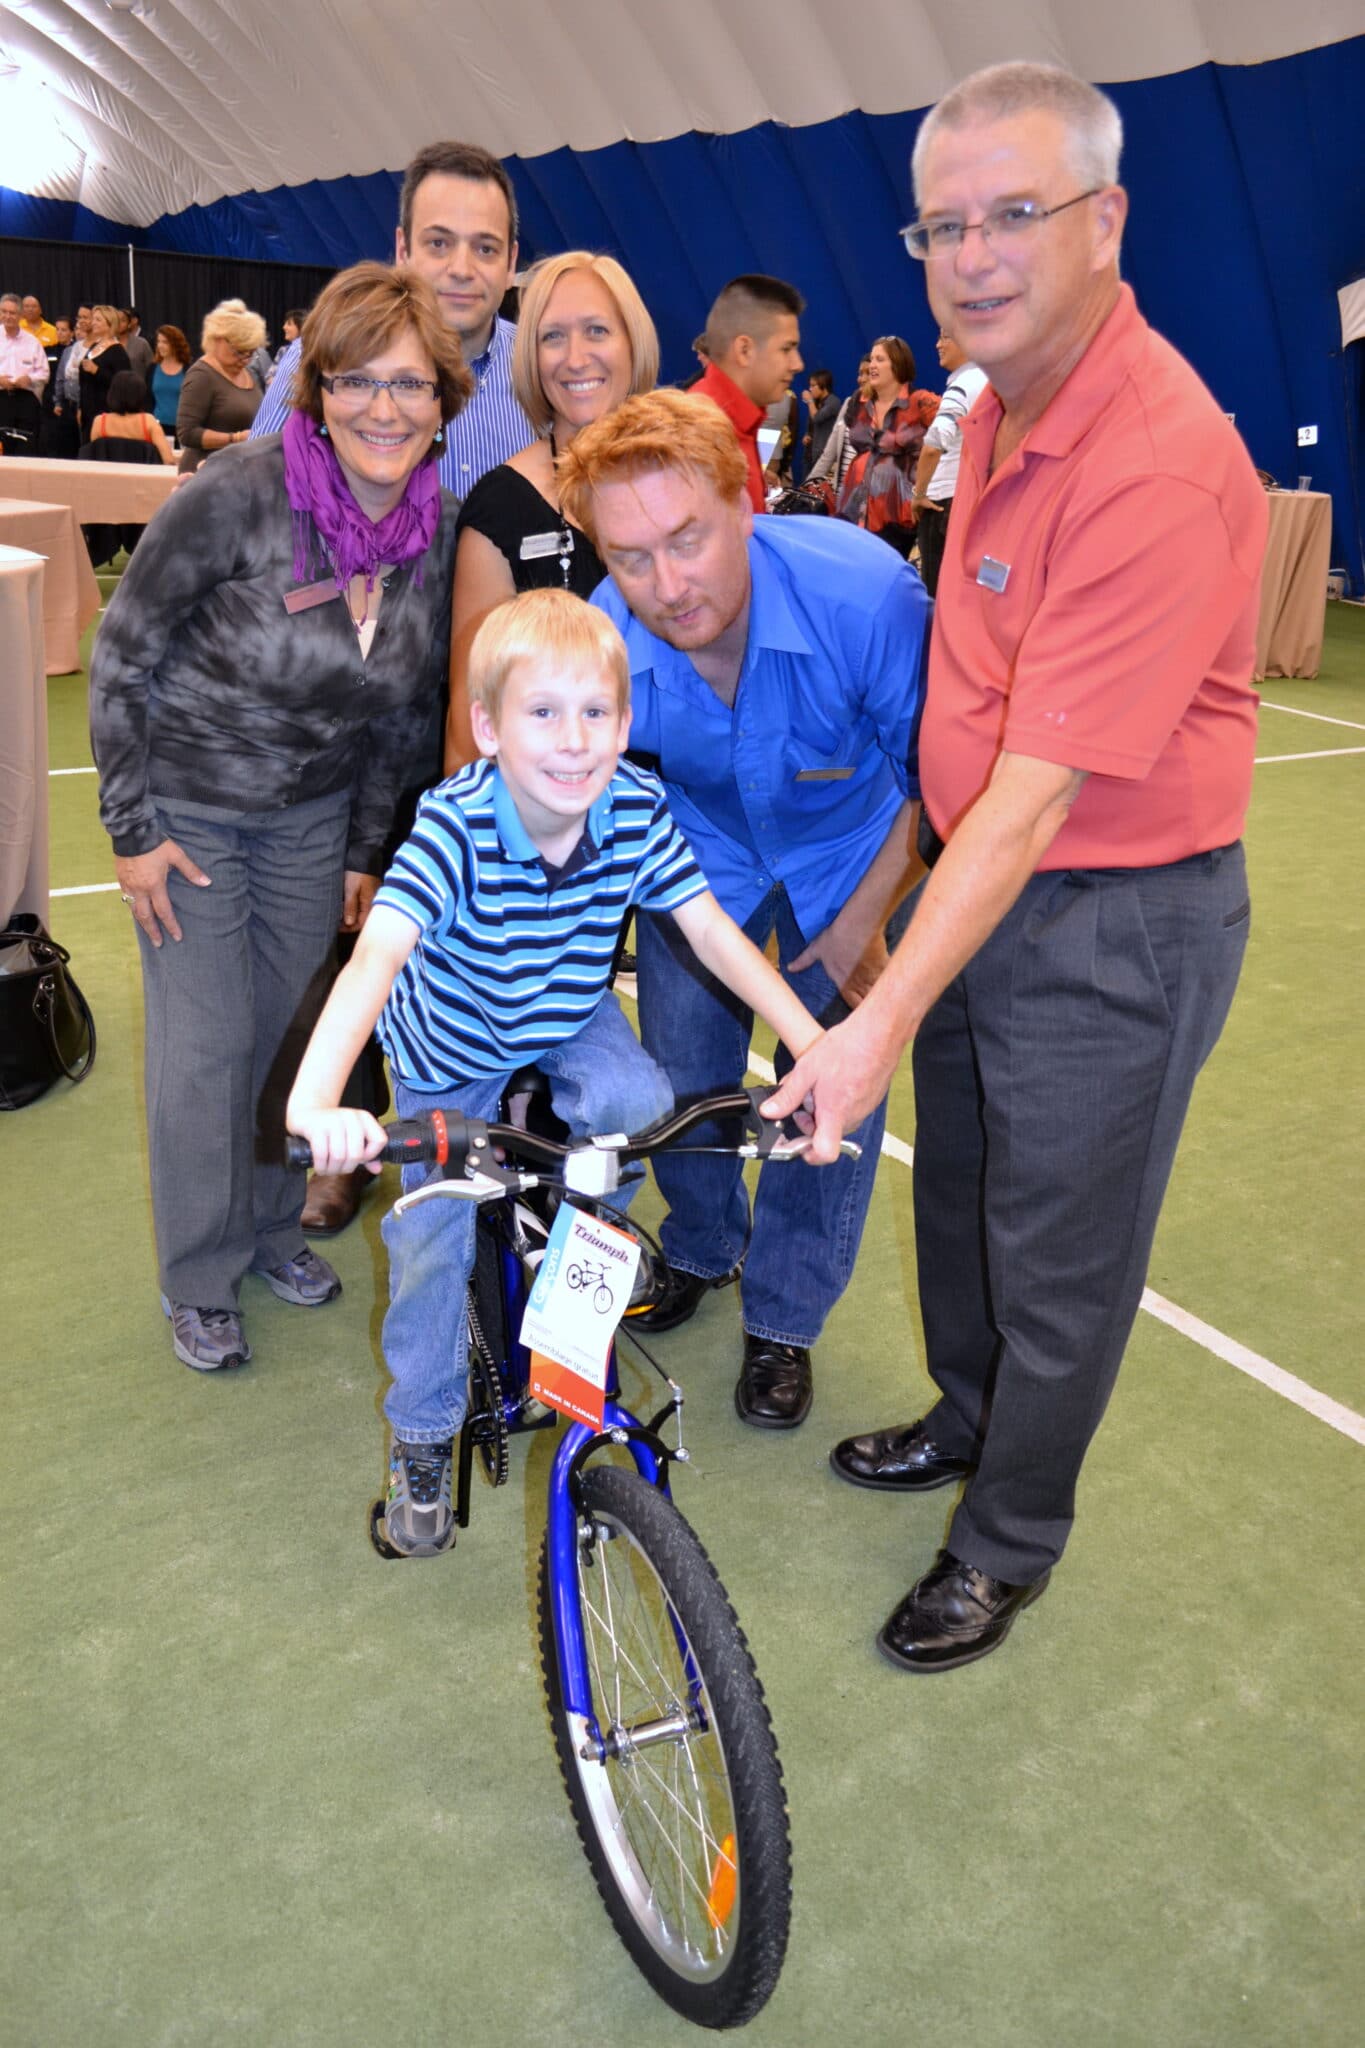 Knightsbridge donates 40 bikes to kids in Canada